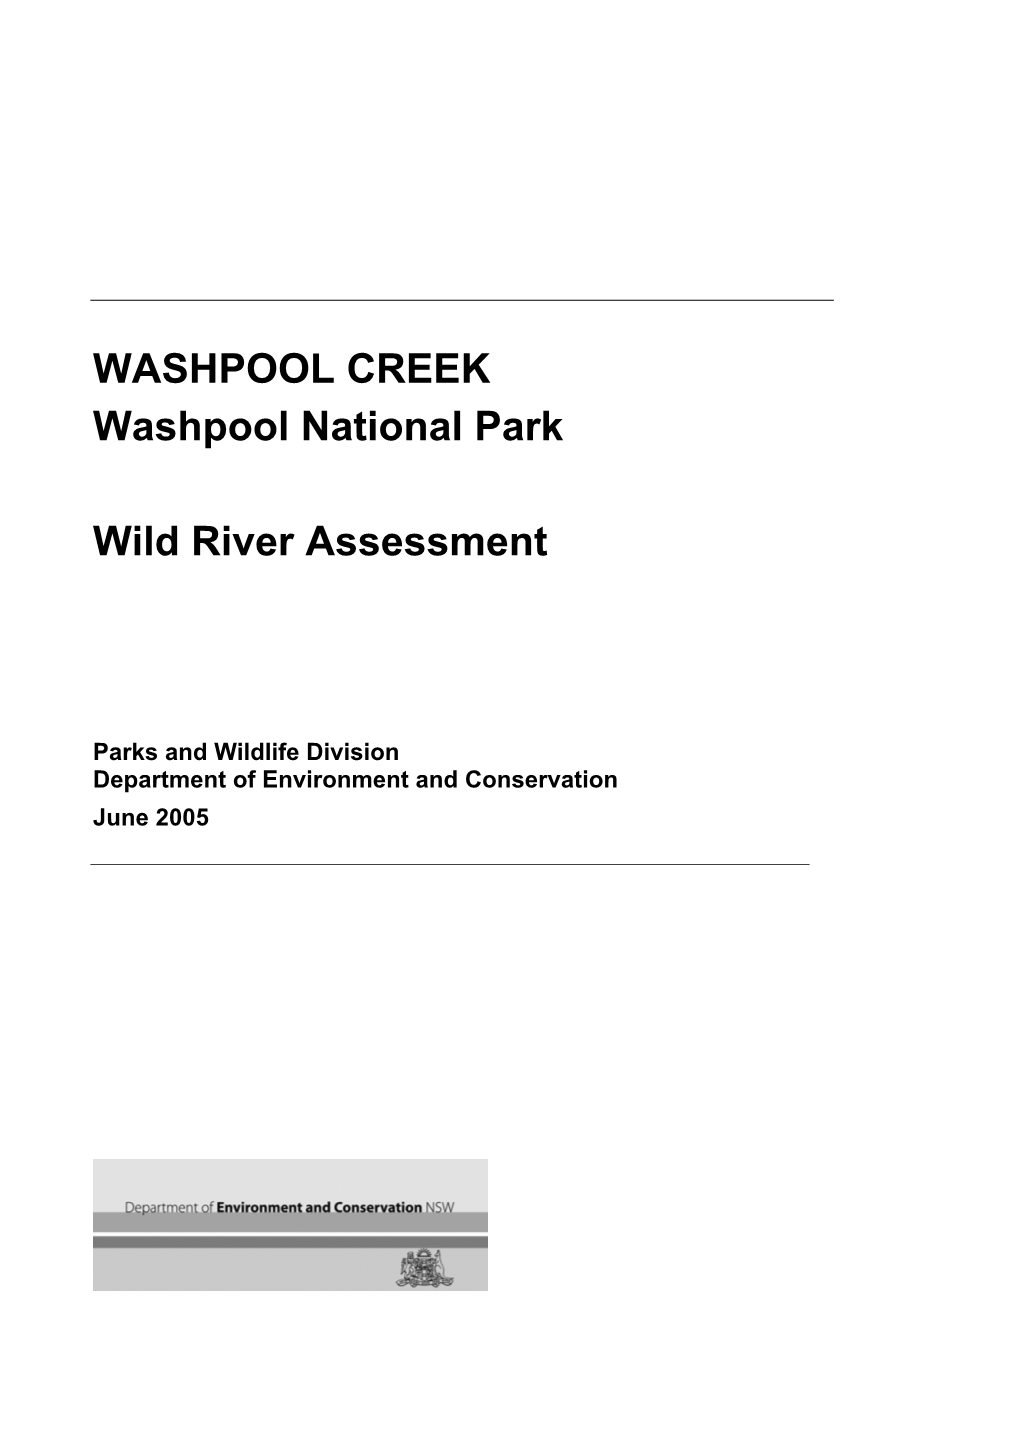 Washpool Creek: Washpool National Park. Wild River Assessment